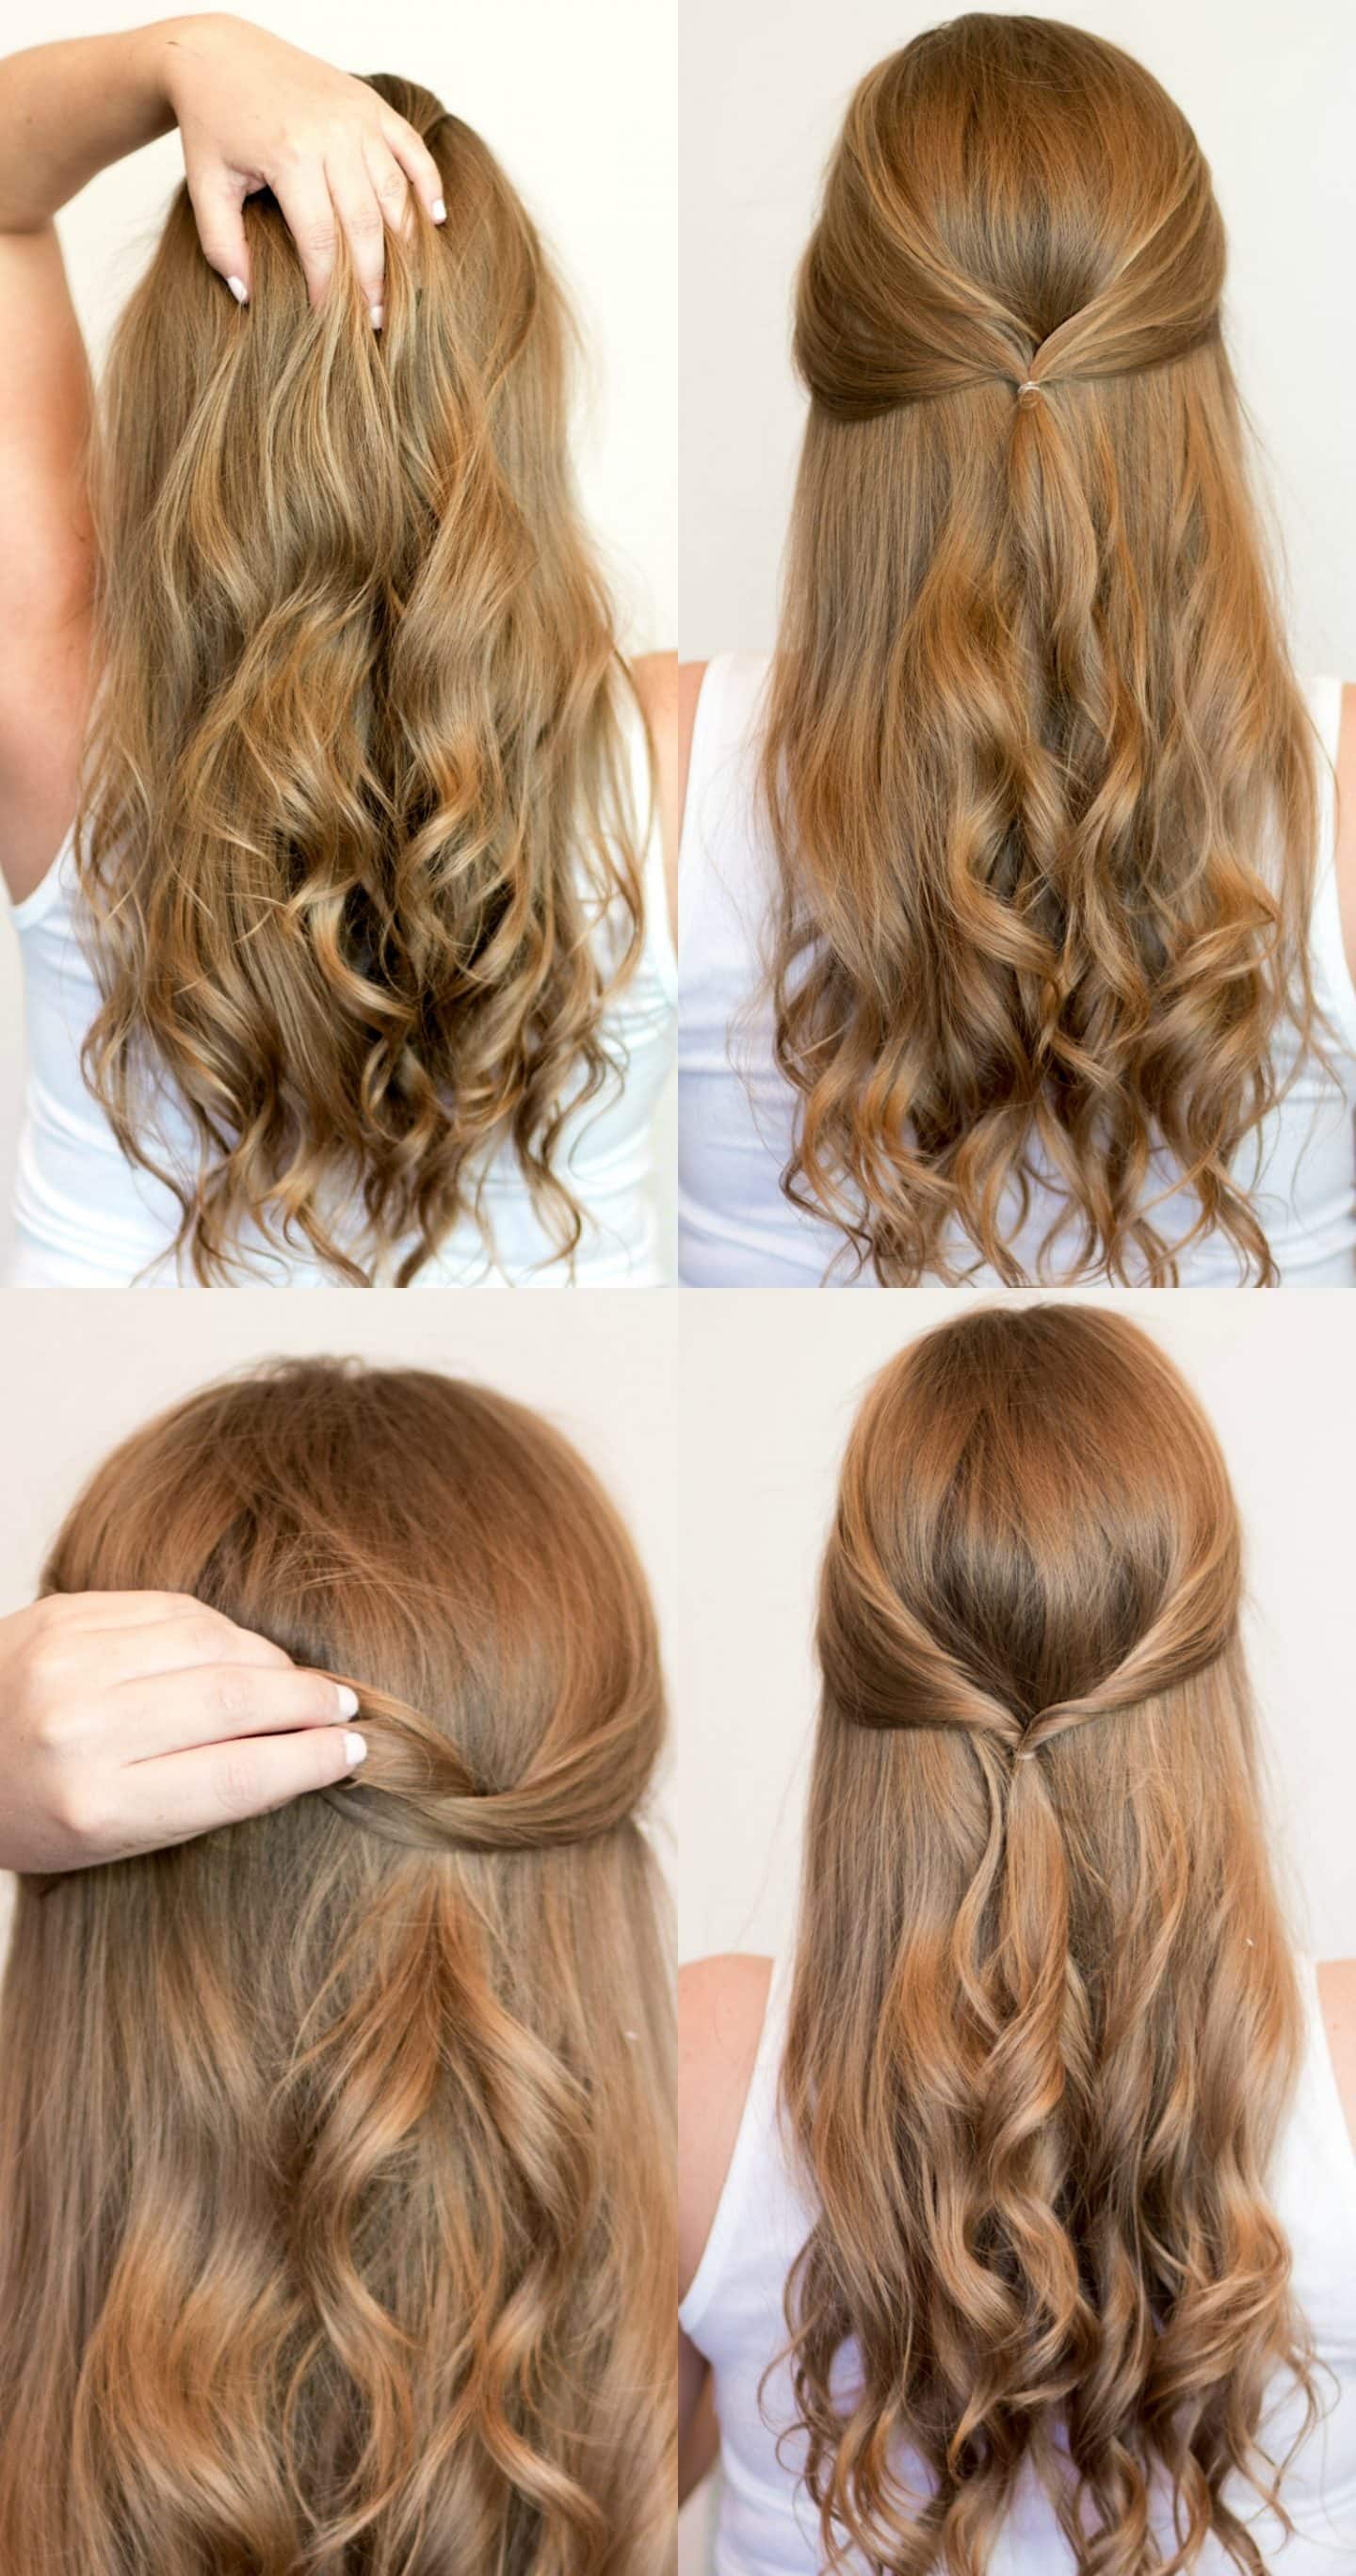 Easy Heatless Hairstyles for Long Hair | Ashley Brooke ...